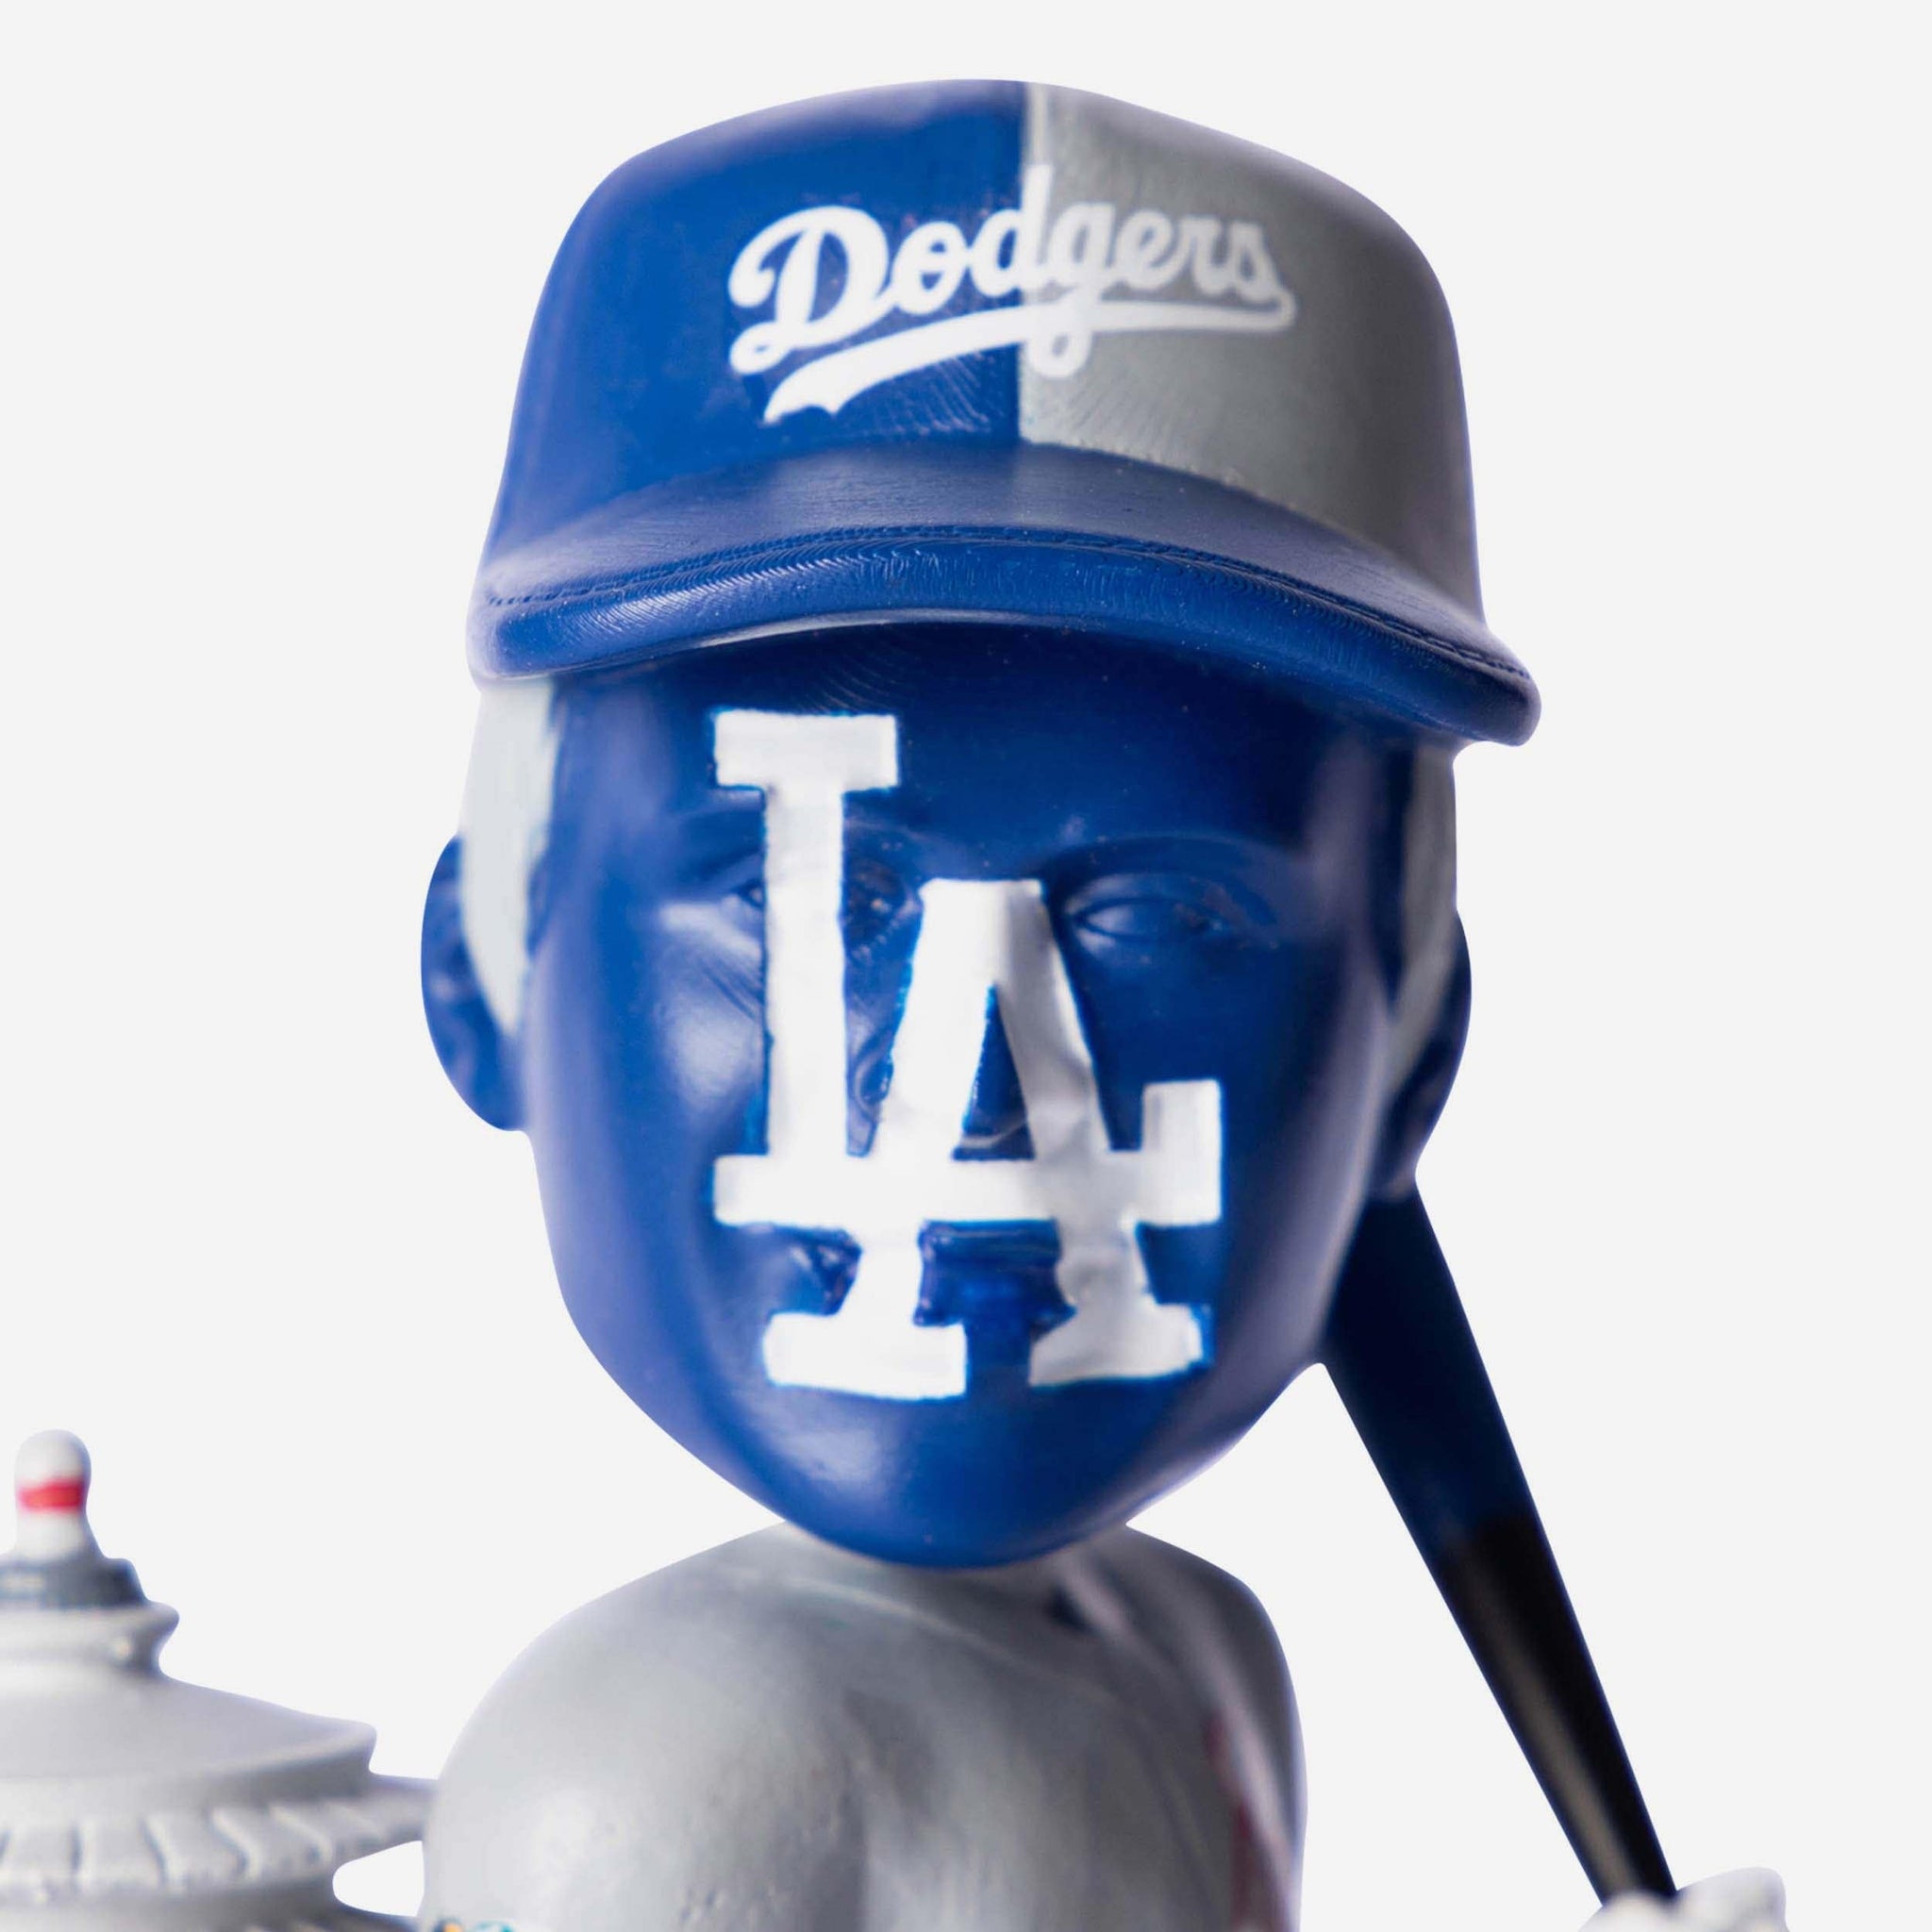 Los Angeles Dodgers 2023 All-Star Bobbles on Parade Bobblehead FOCO